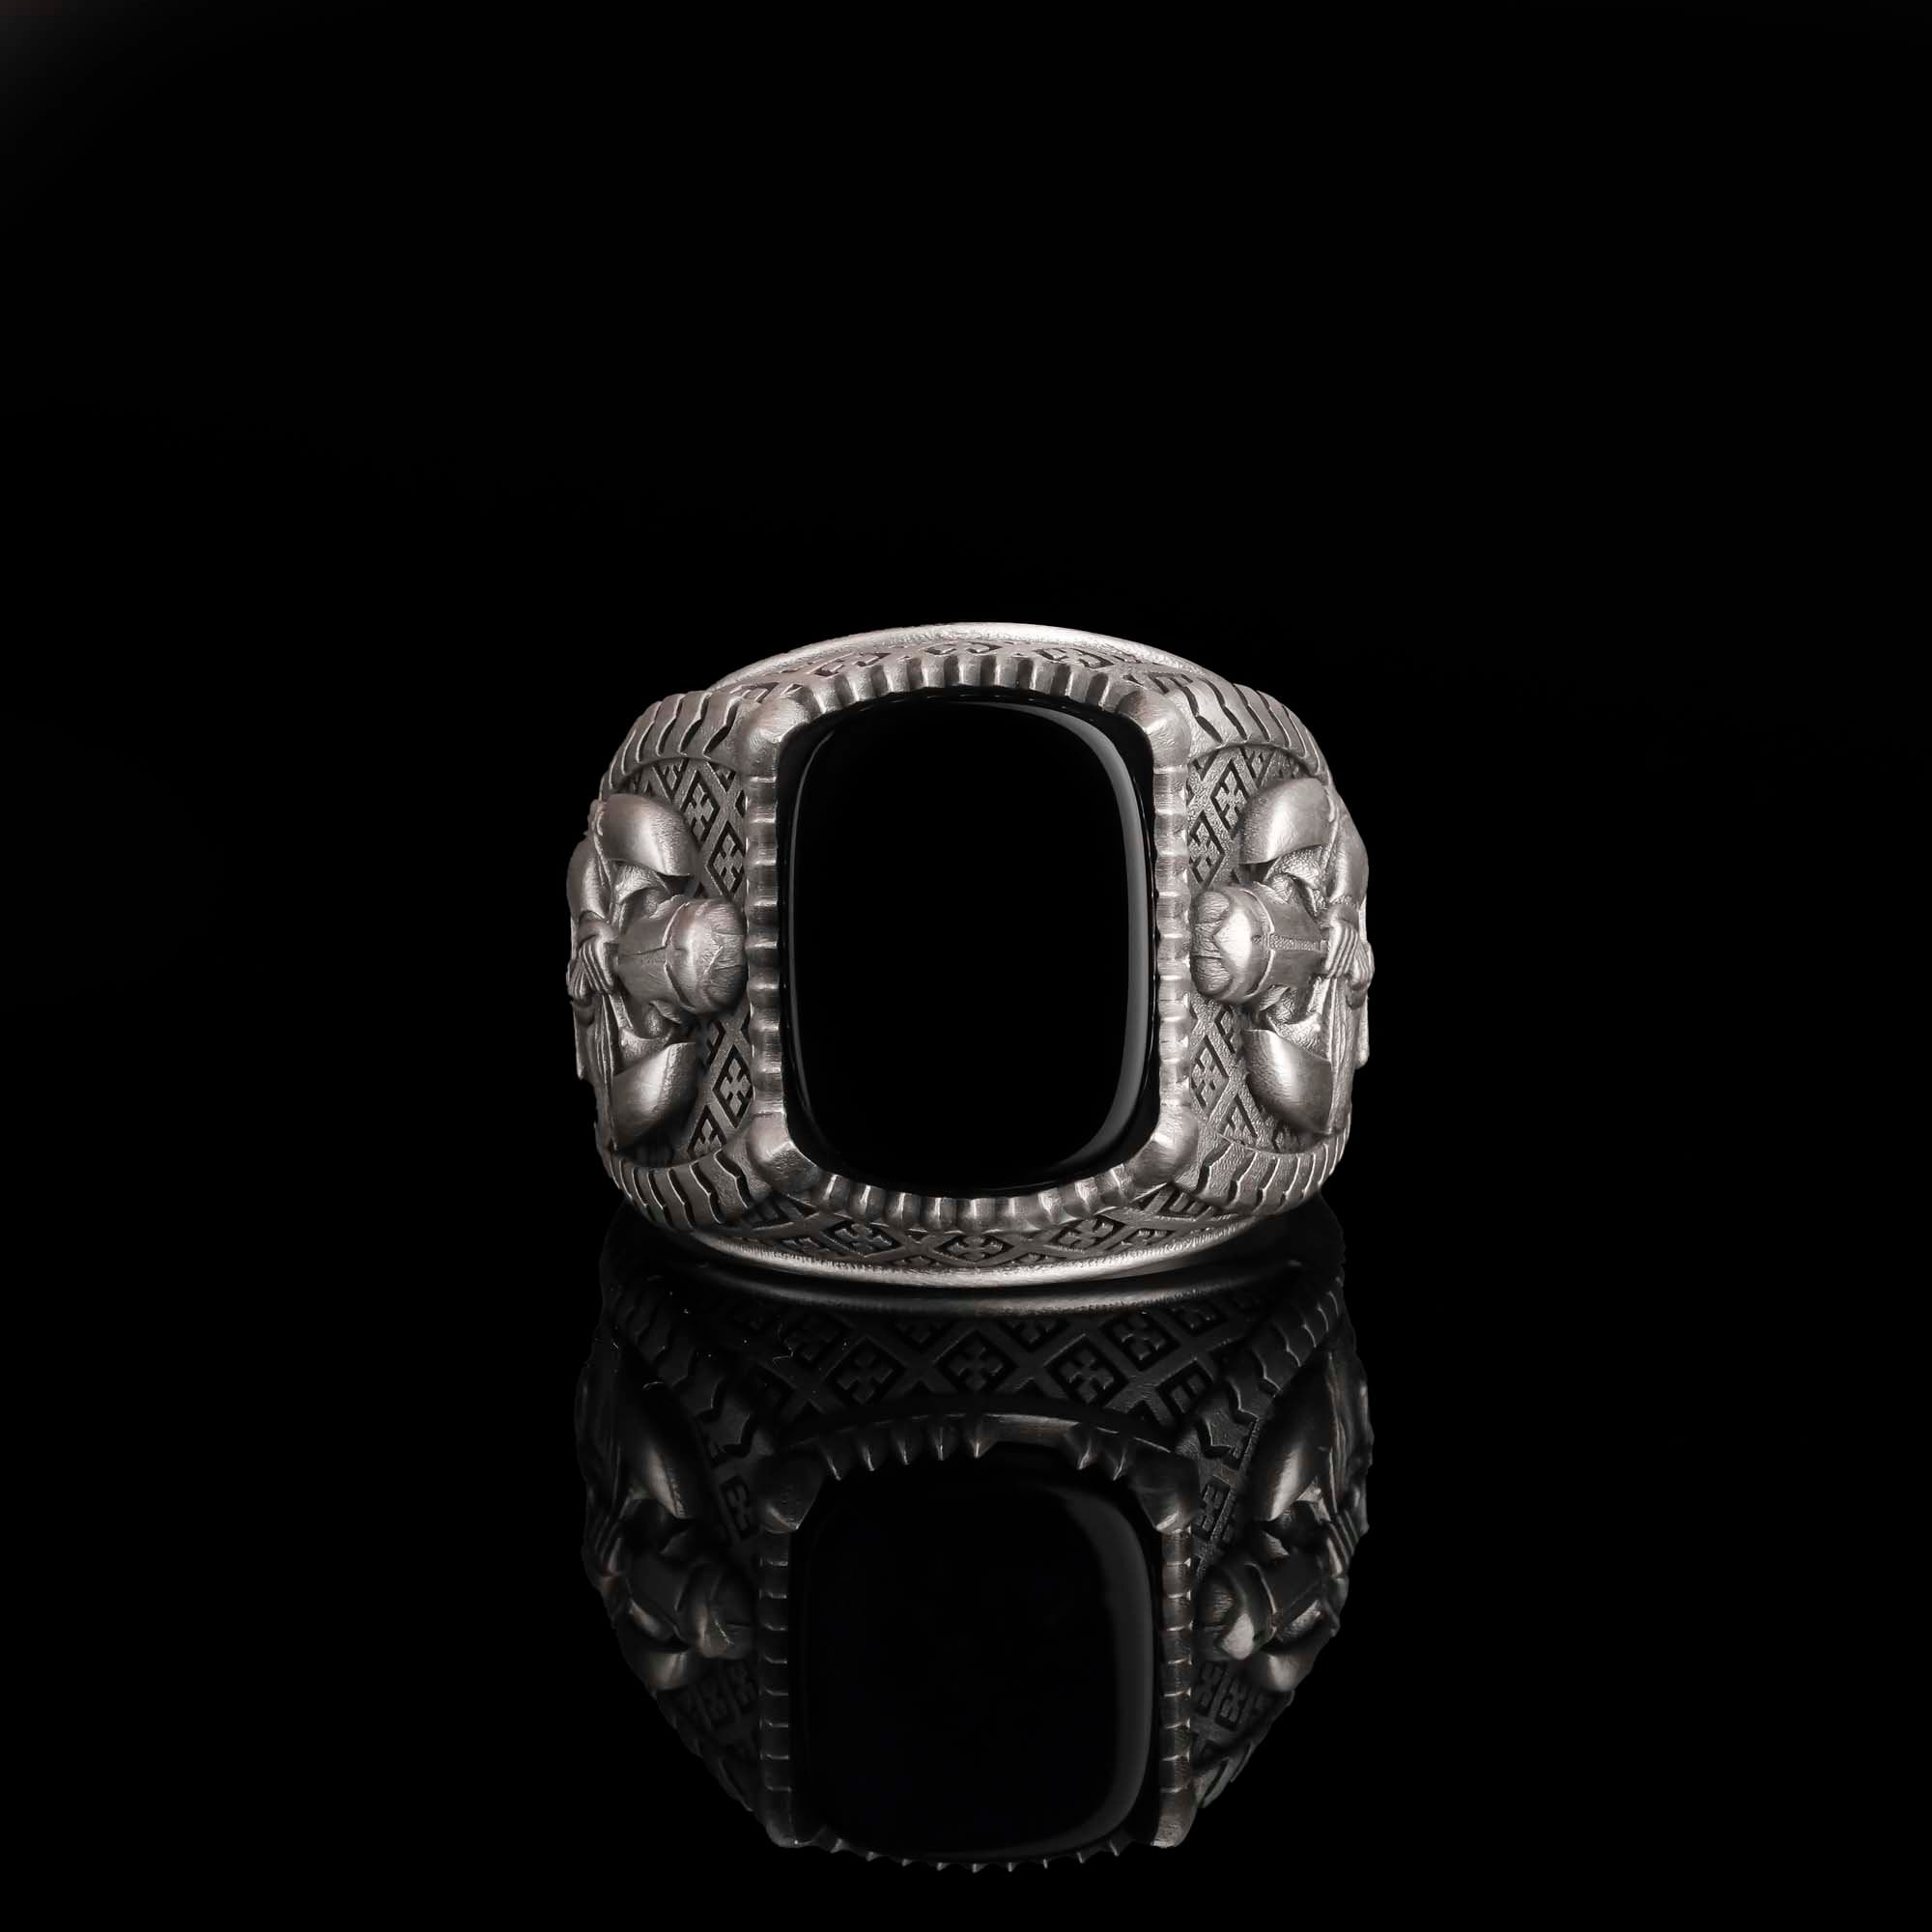 Templar Knight Ring, Gemstone Ring, Cushion Gemstone, Men's Religious, Christian Gift, Knight Jewelry, Crusader Ring, Faith Symbol